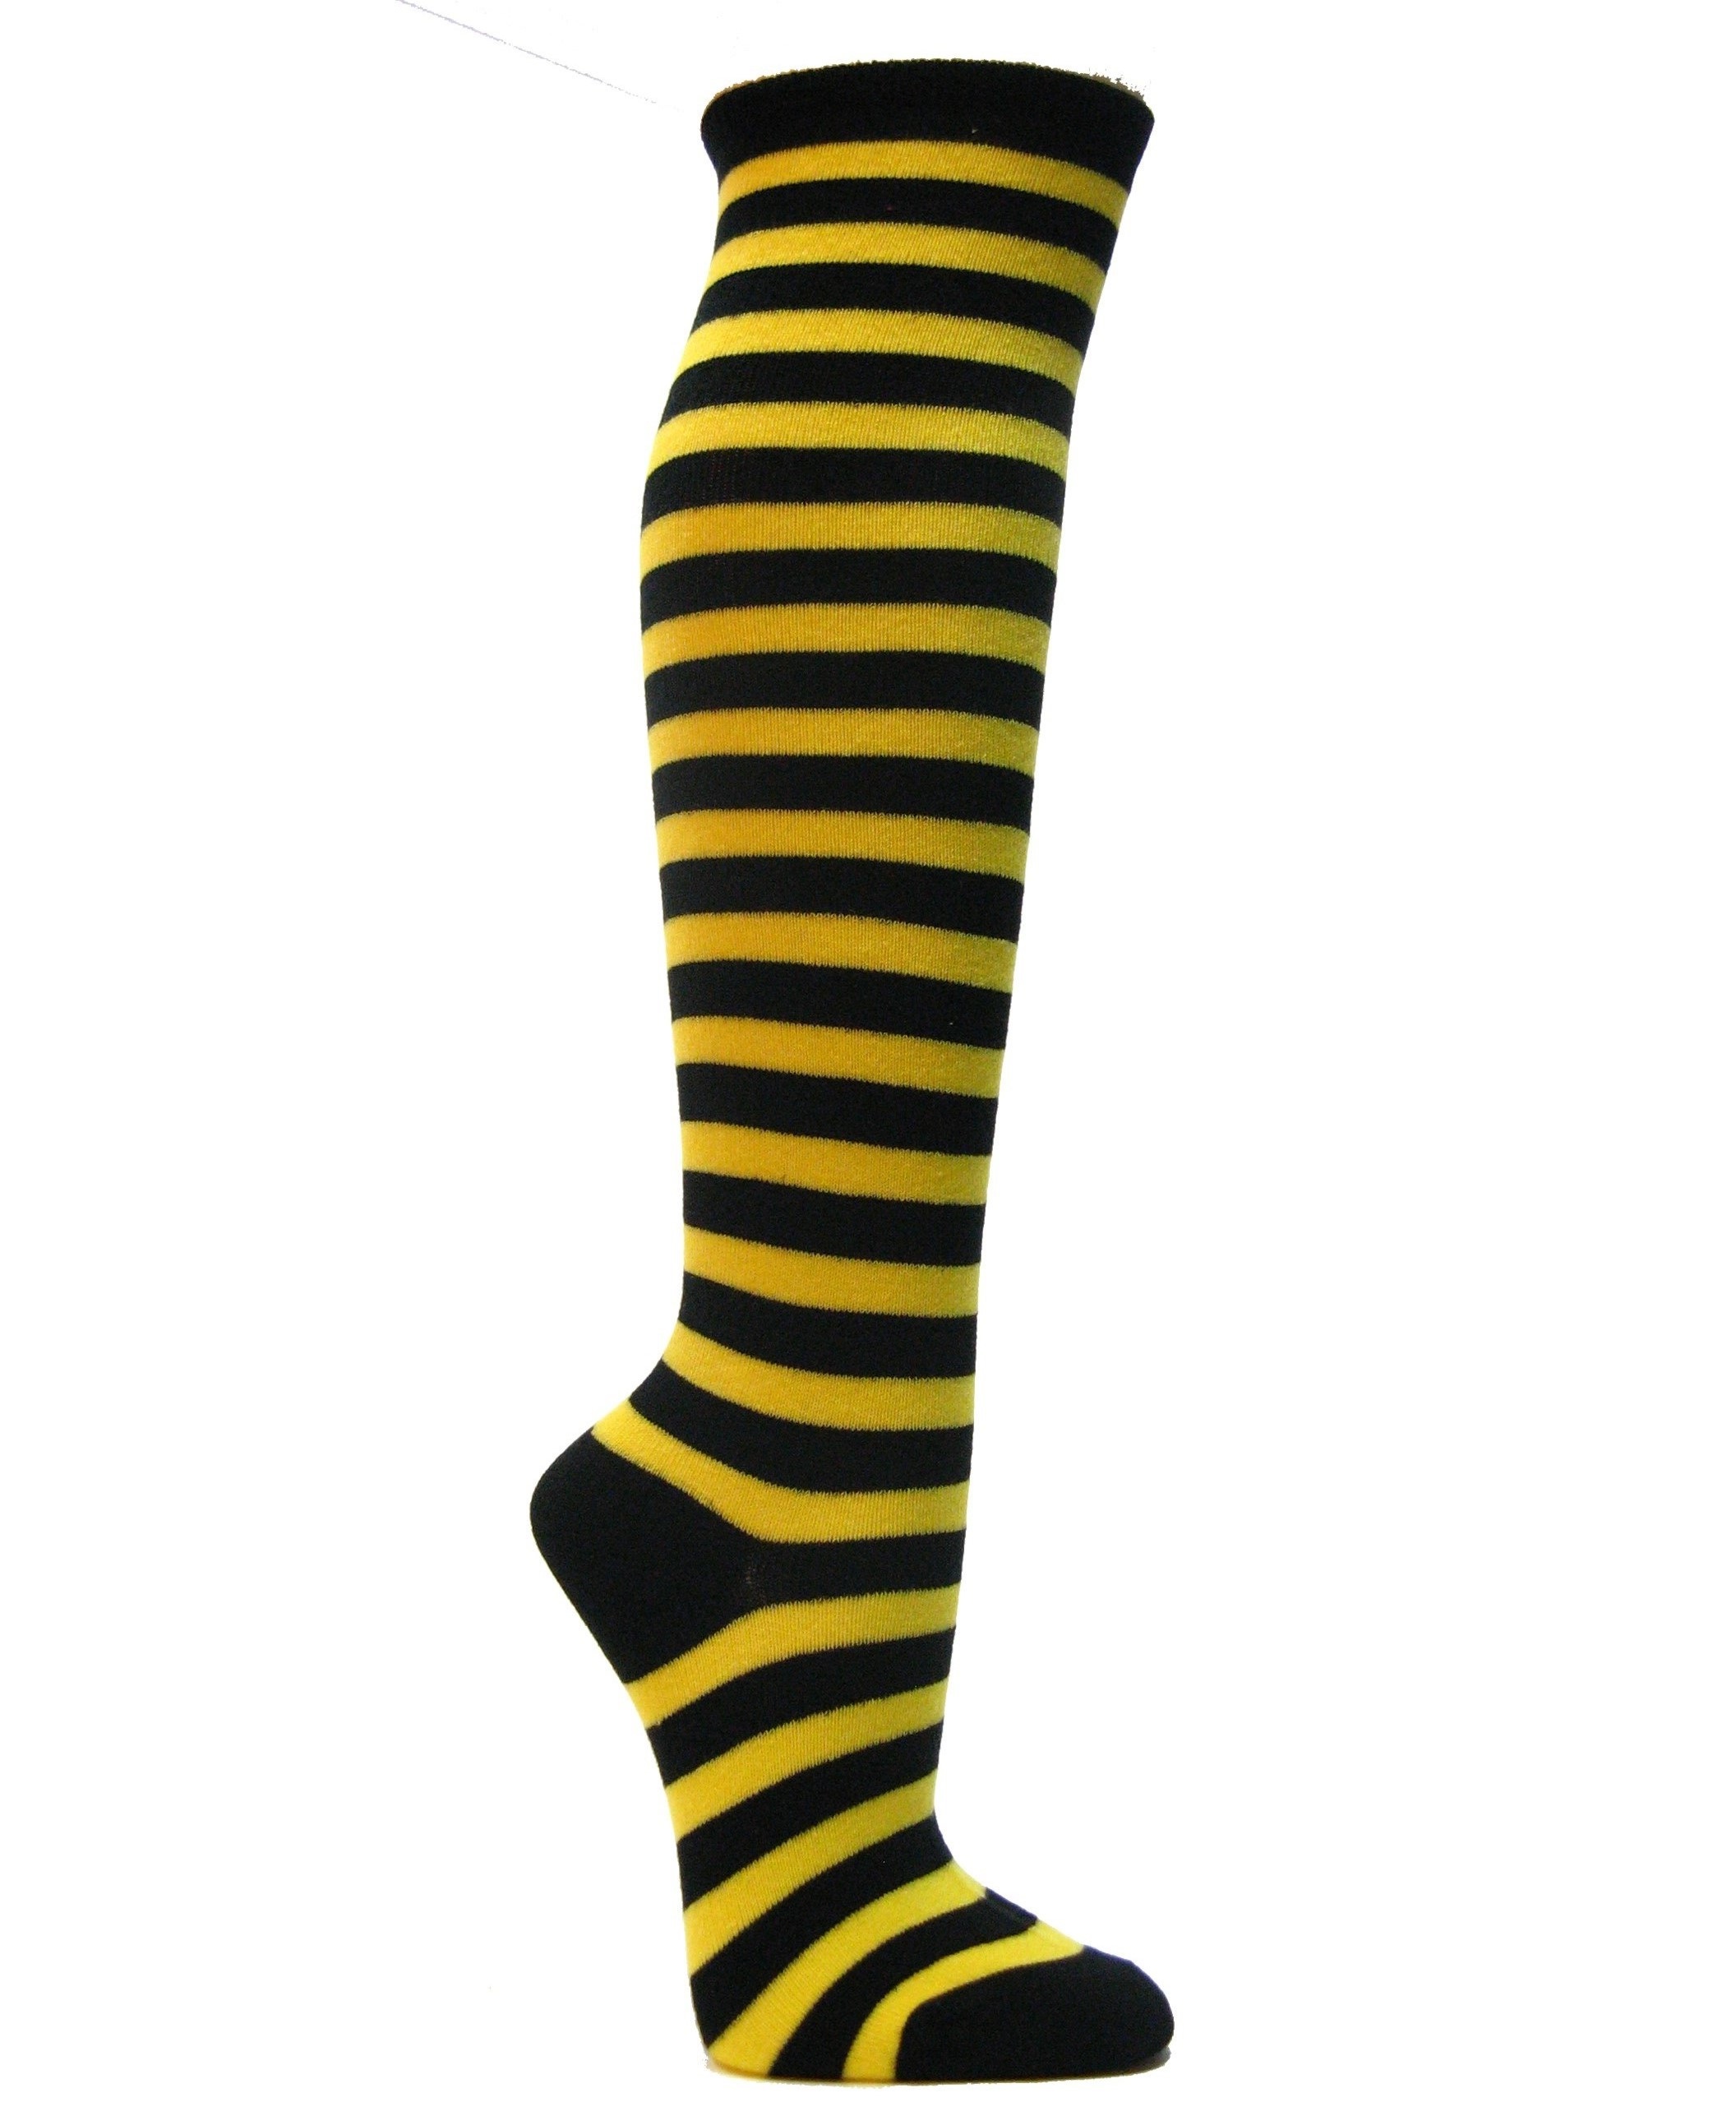 Black / Bright Yellow Stripes Women's Fashion High Socks